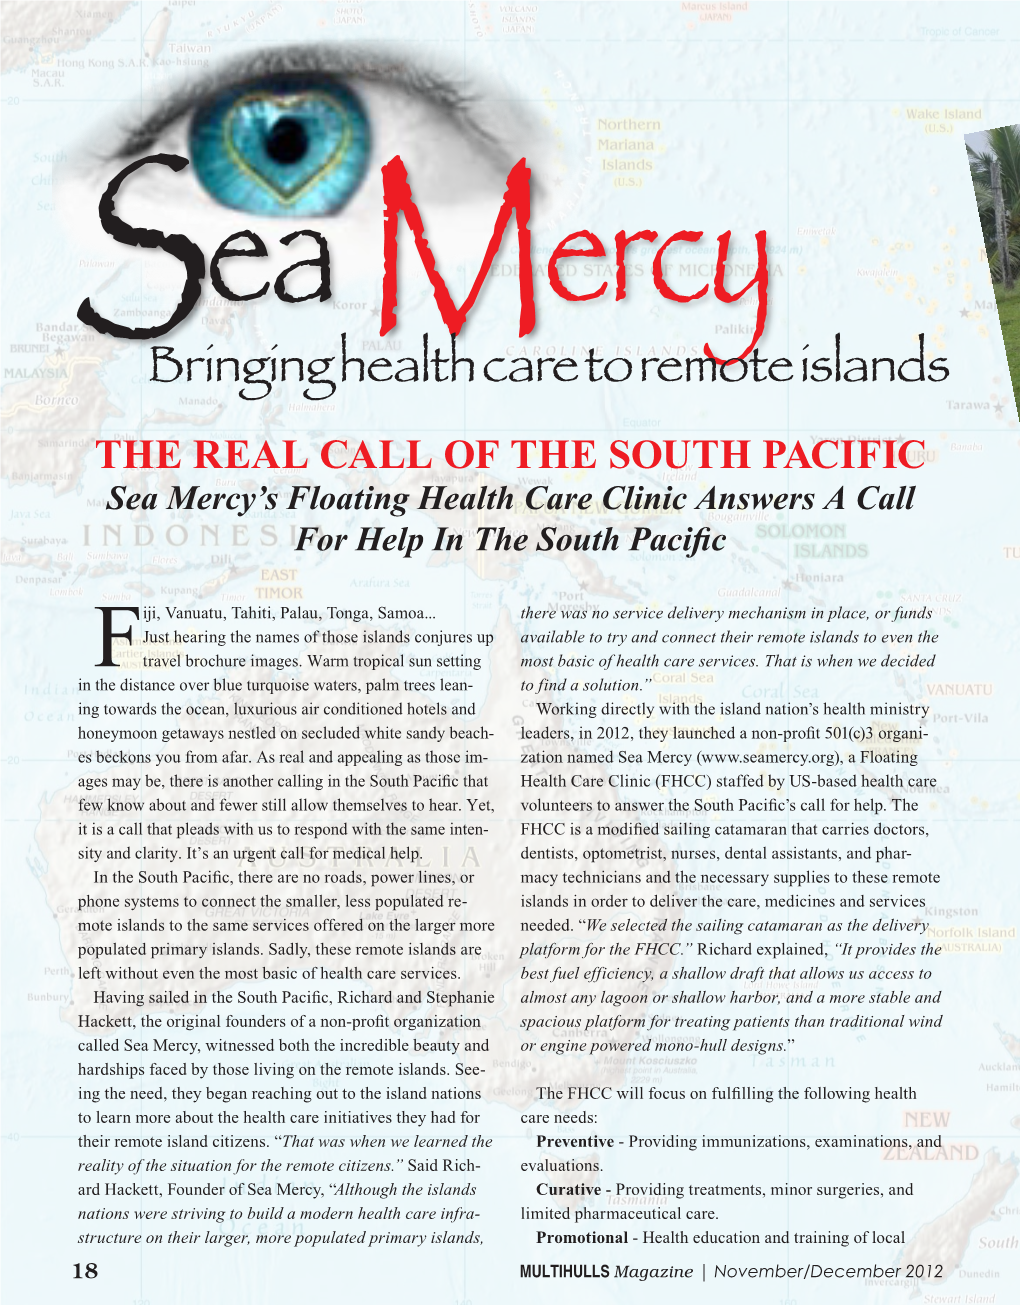 Bringing Health Care to Remote Islands